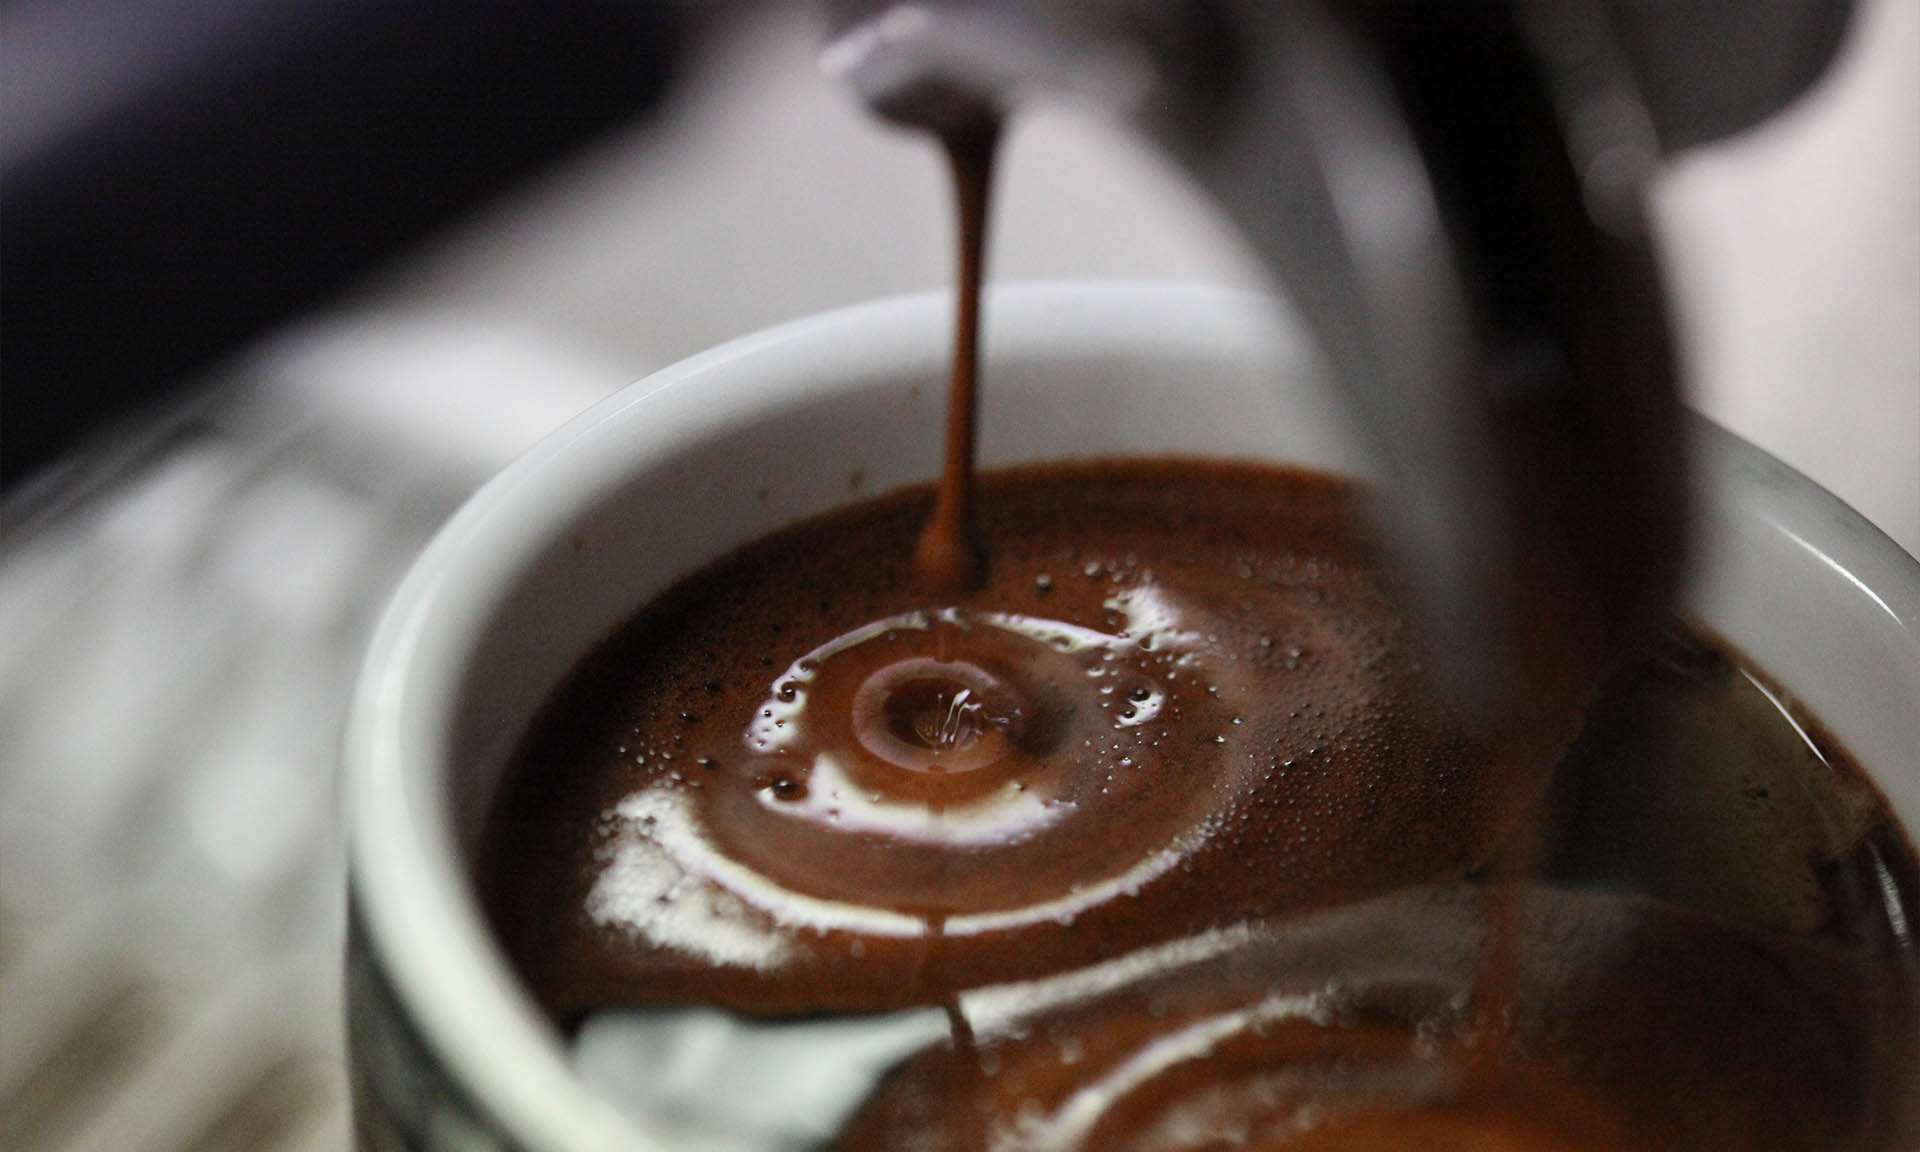 Coffee or Espresso? Why not Brew Both!